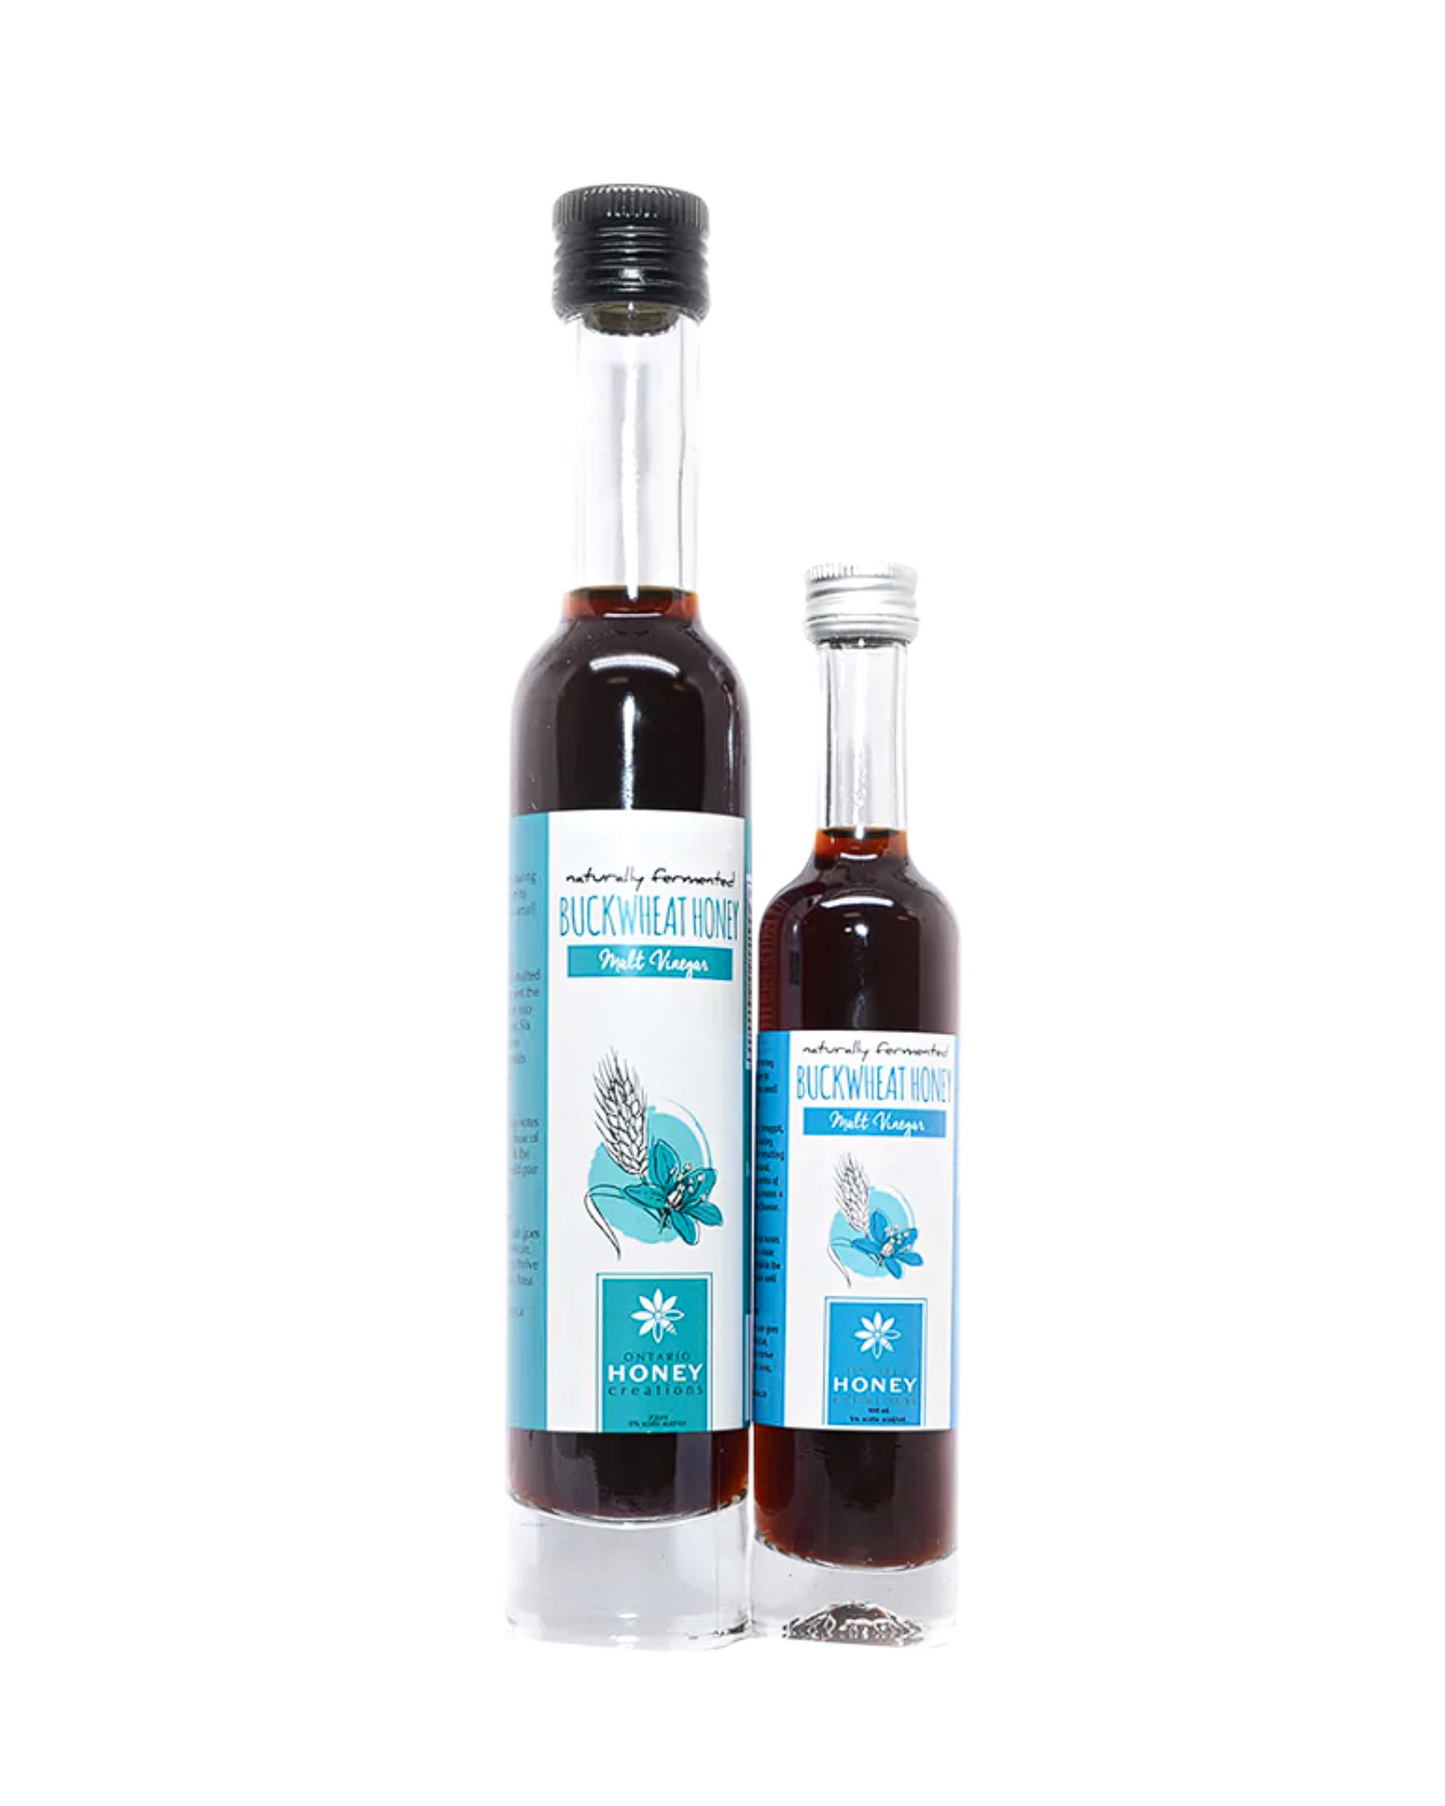 Buckwheat Honey Malt Vinegar Collection